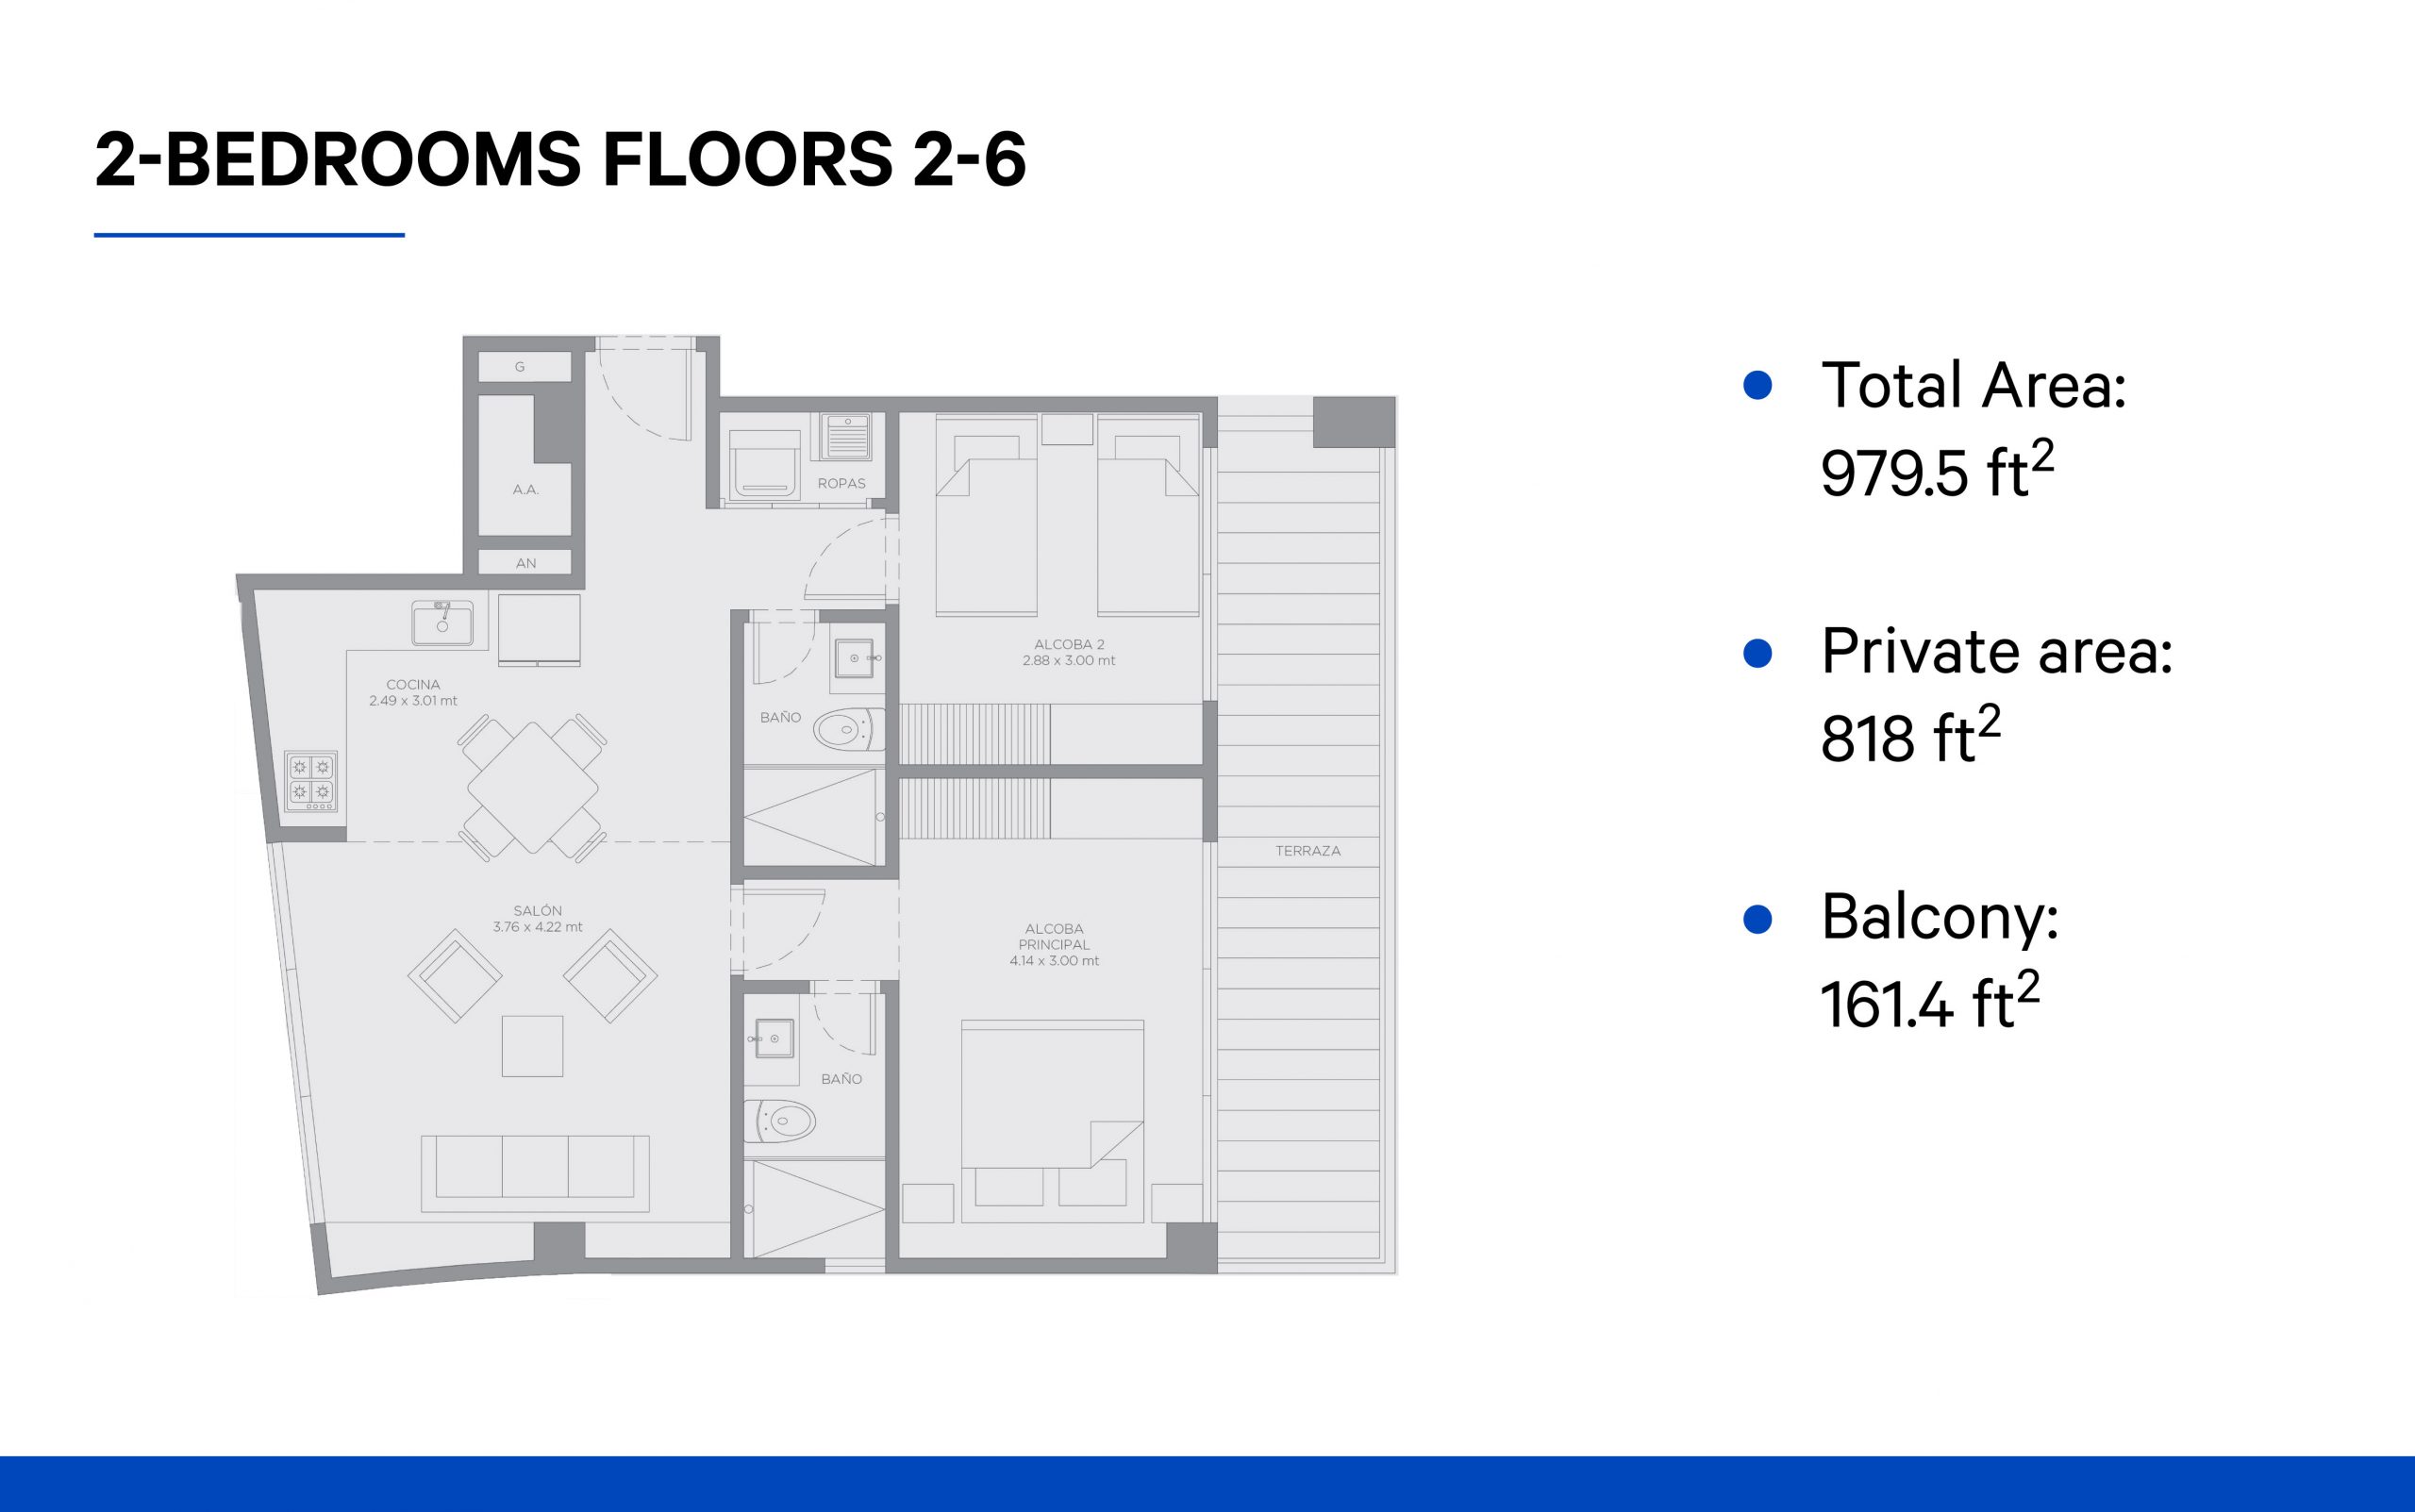 2-bedroom (2-6 floors)